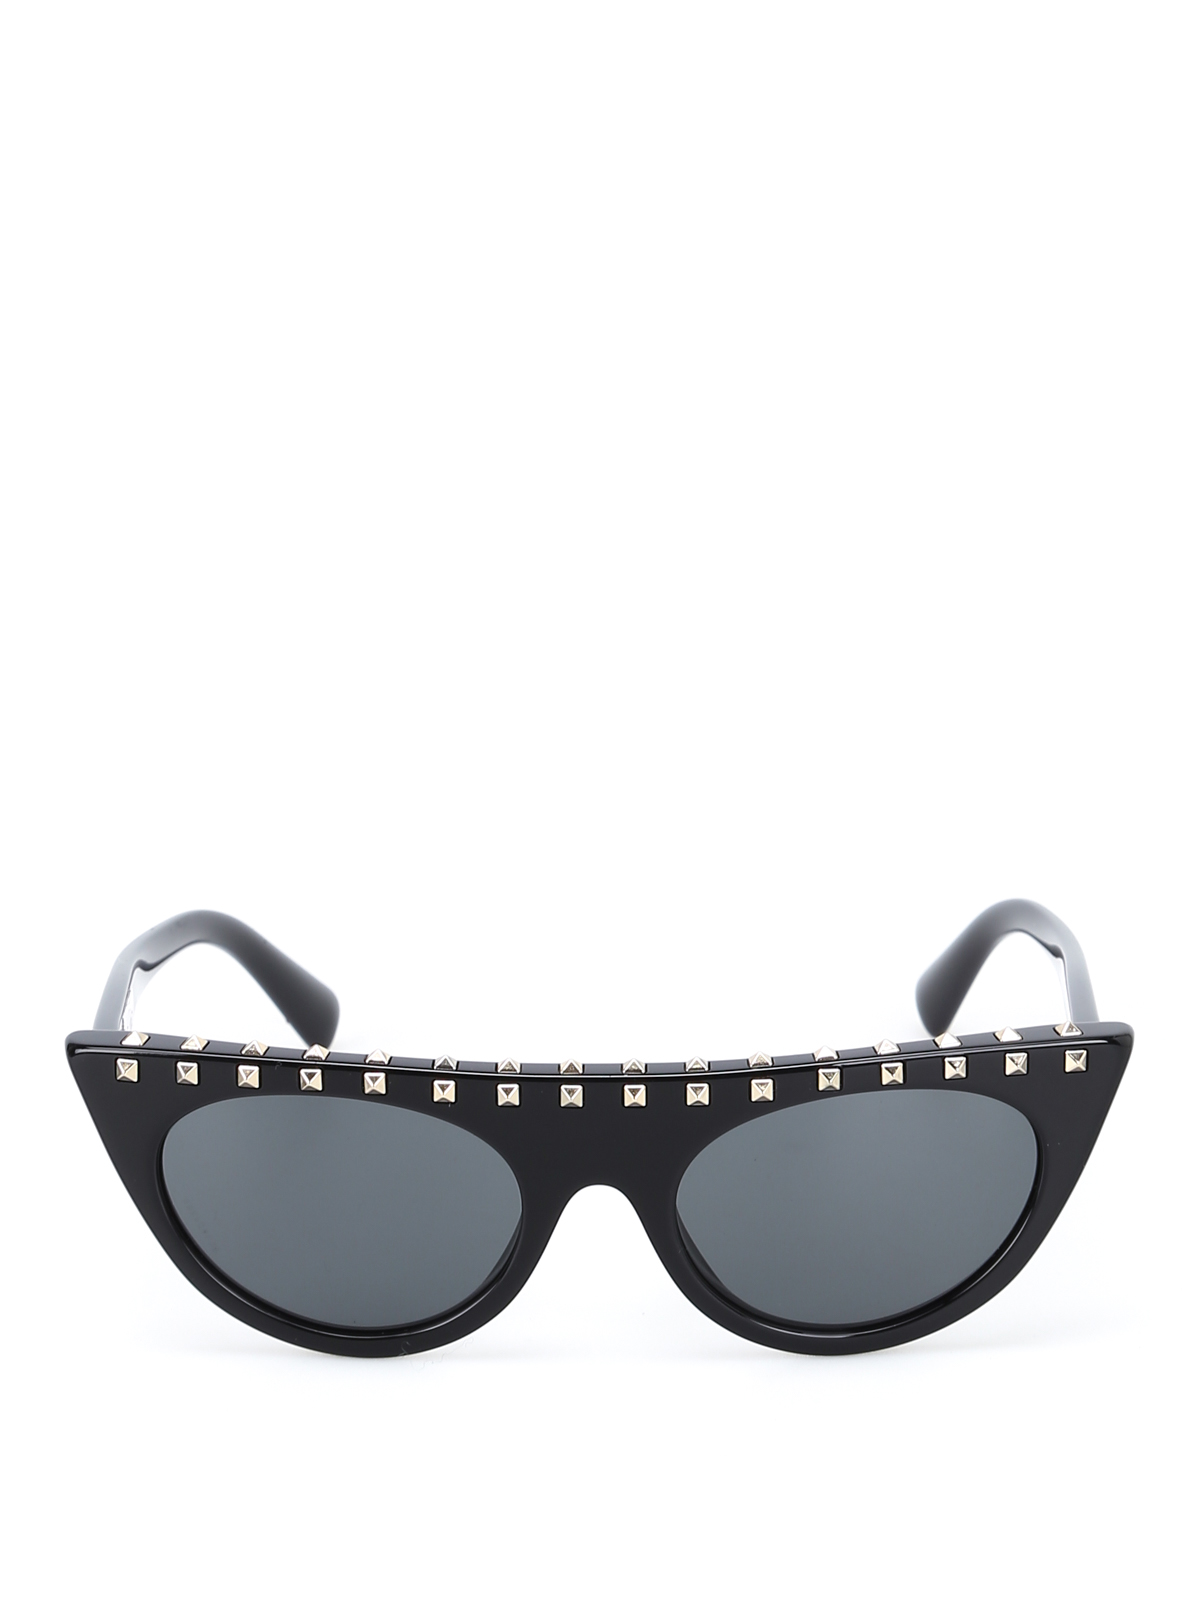 Sunglasses Valentino Garavani - Stud embellished black sunglasses ...